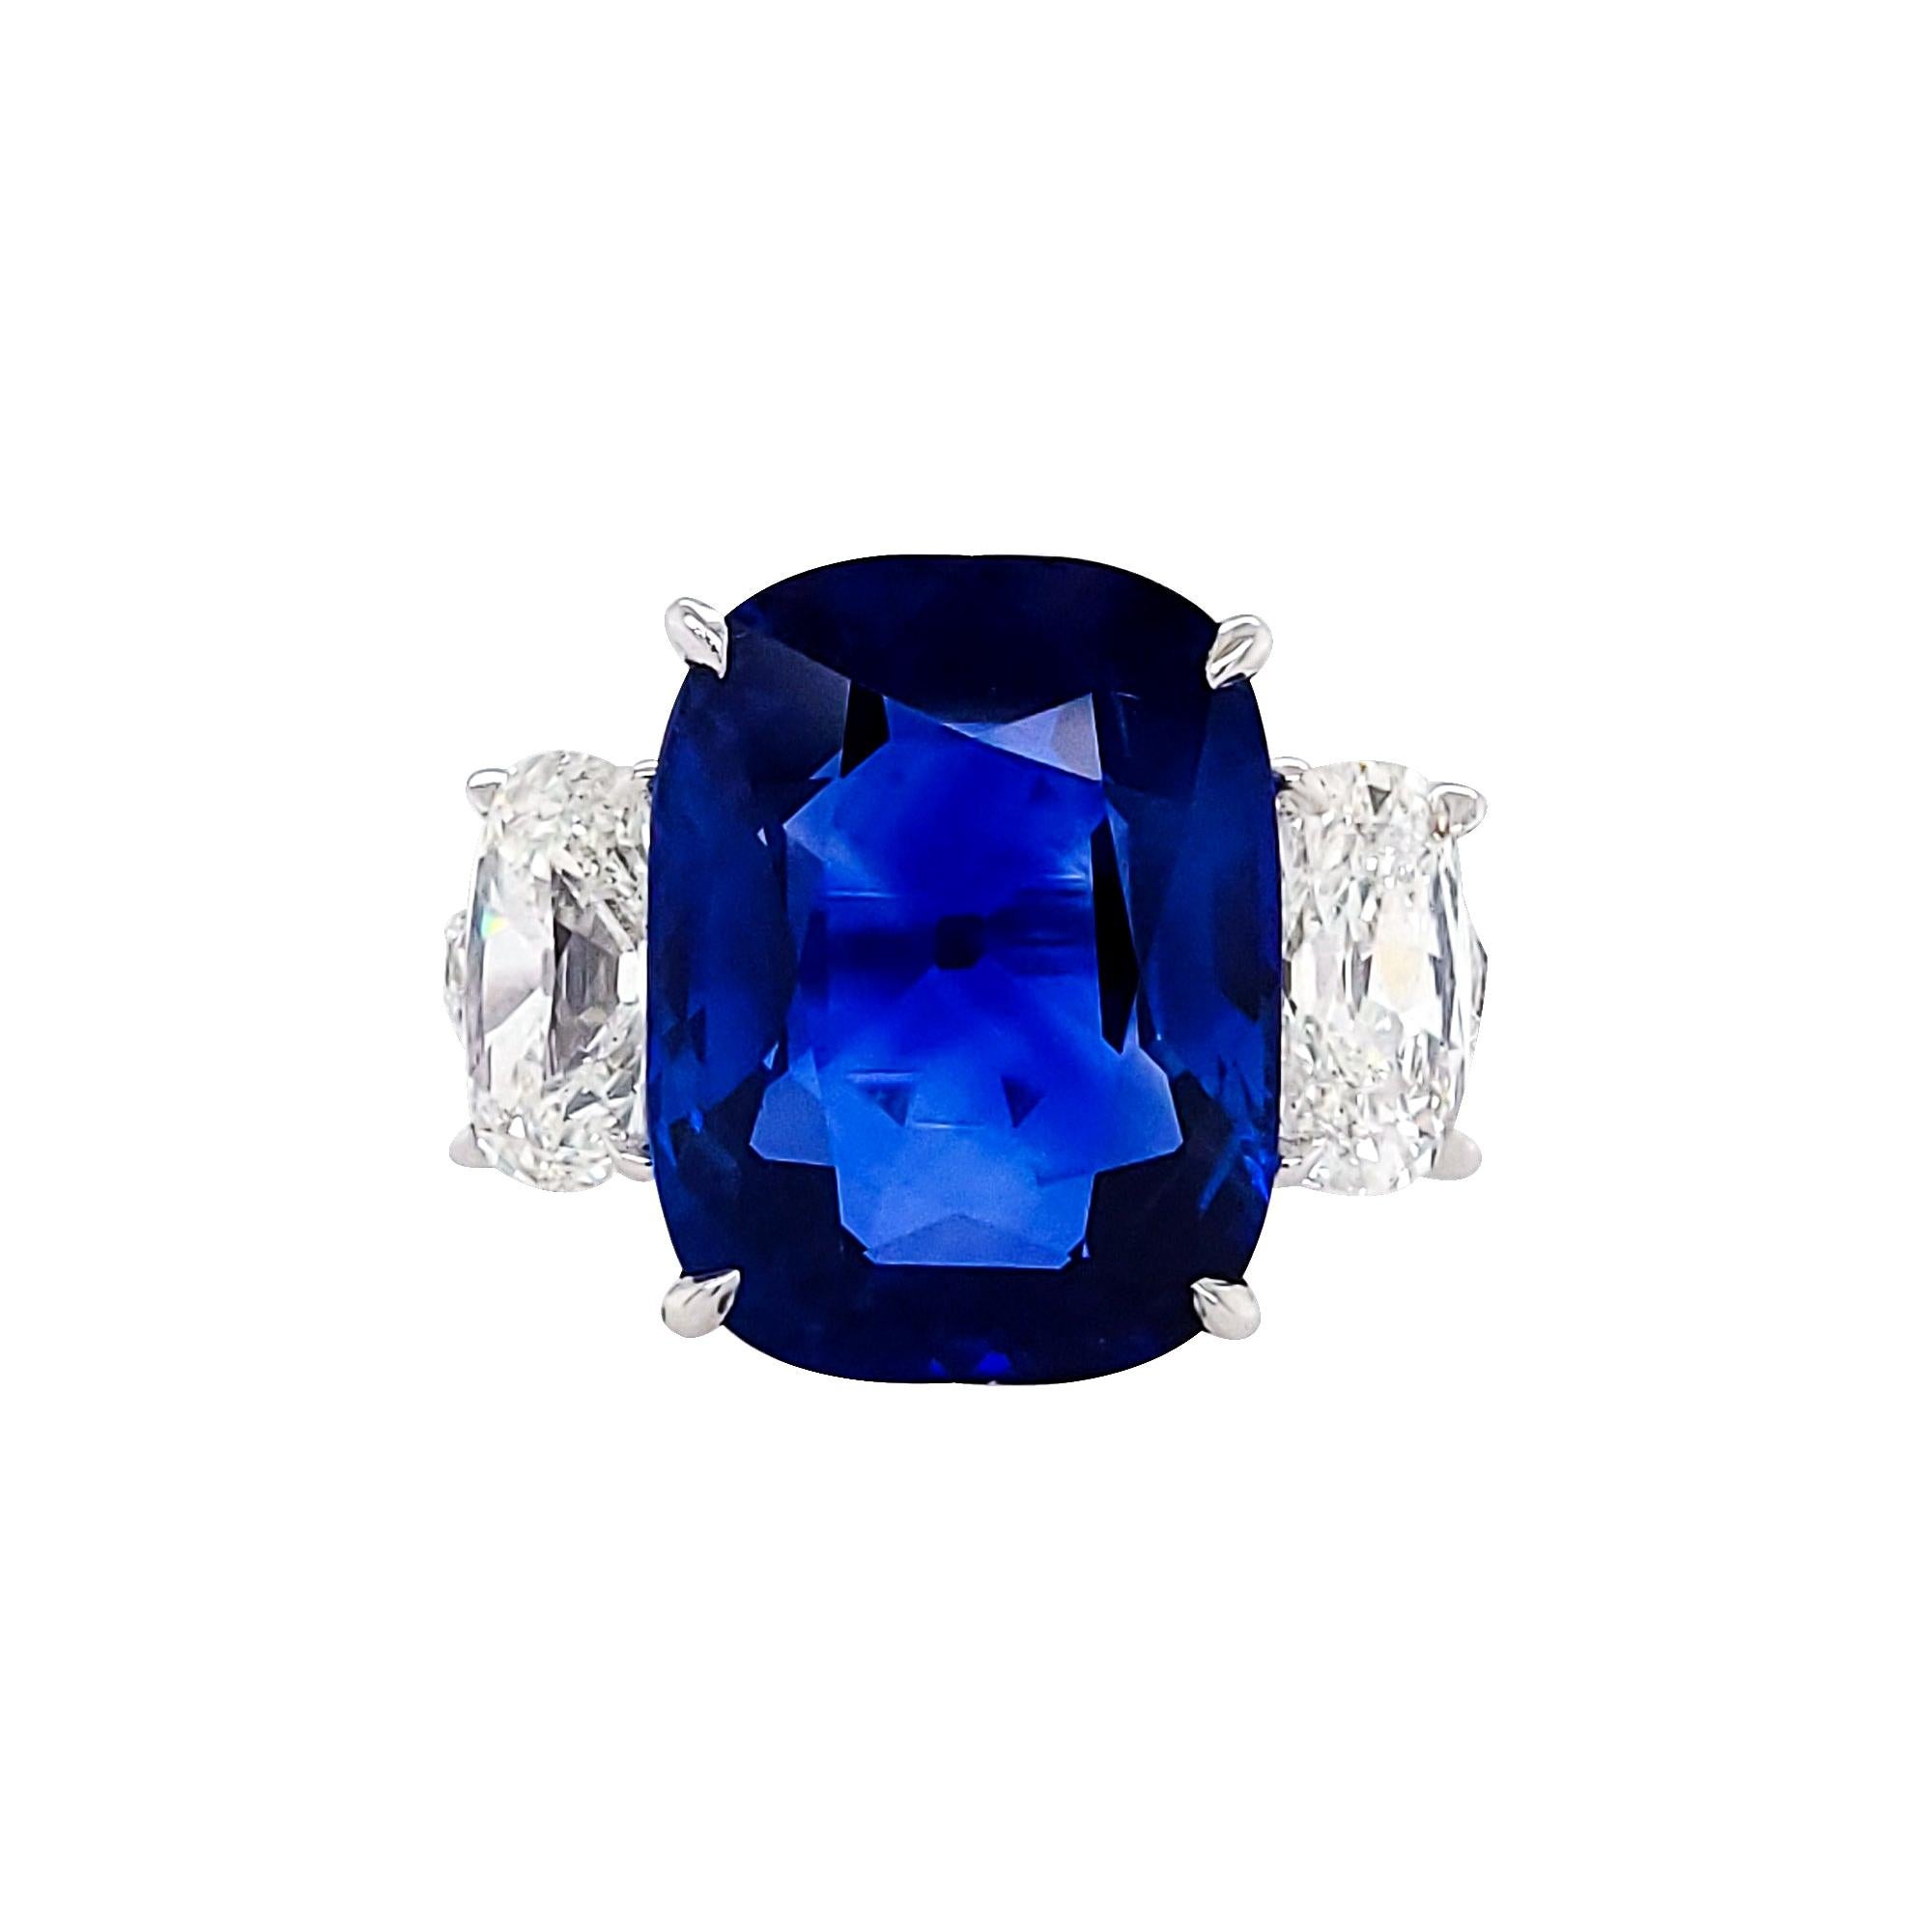 Certified 10.58 Carat Sapphire Diamond Cocktail Ring